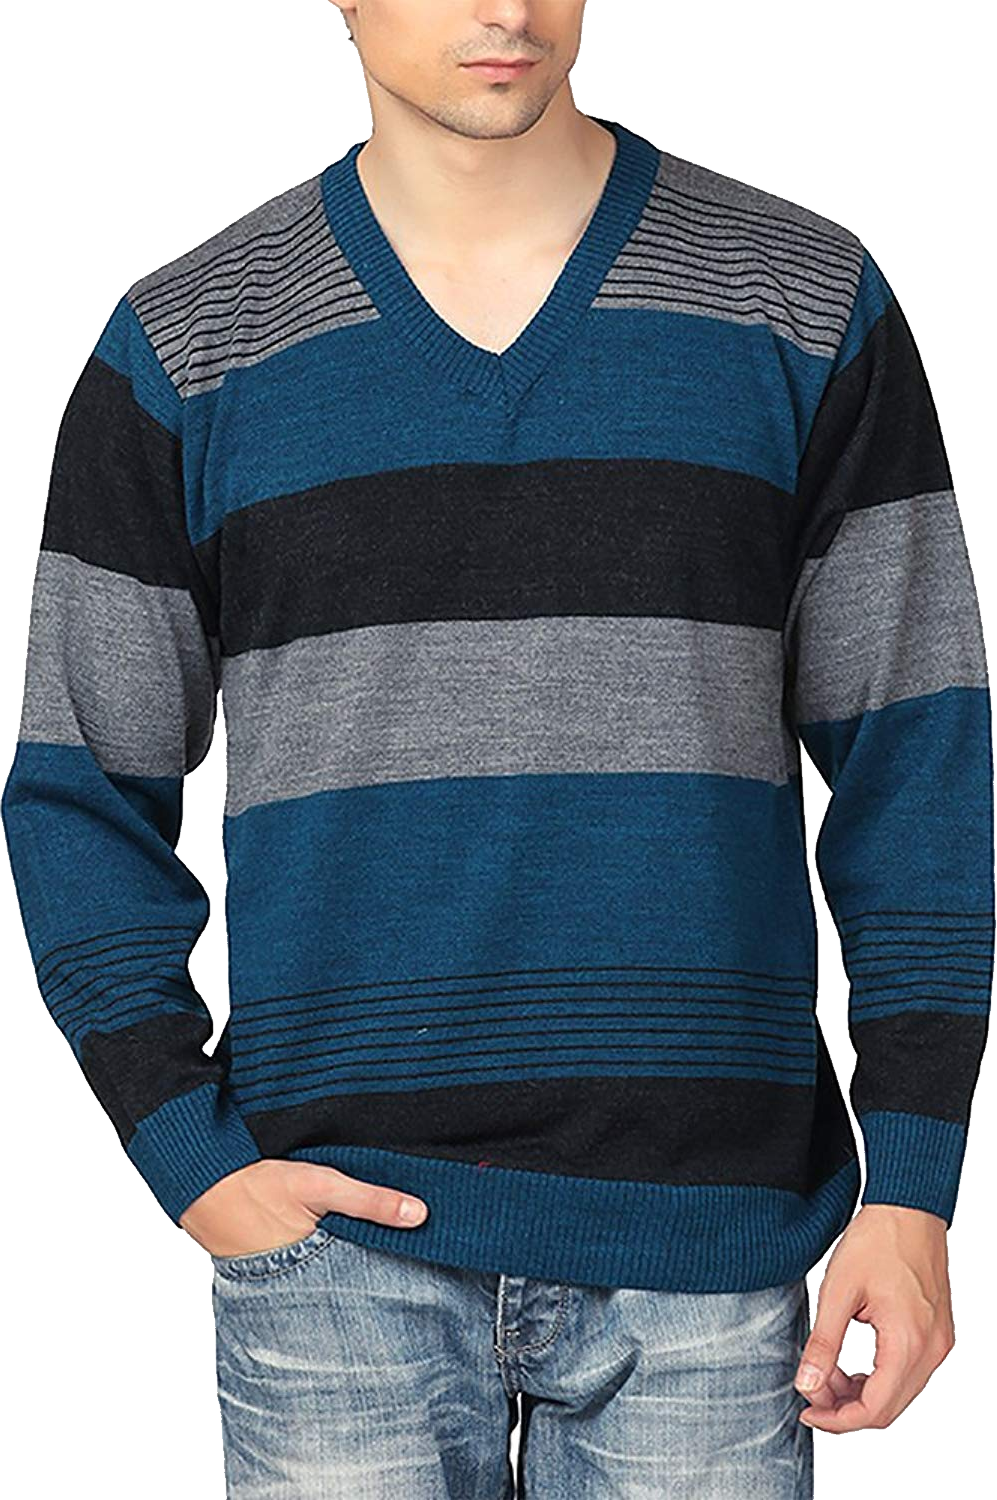 Knitting Sweater Transparent Image